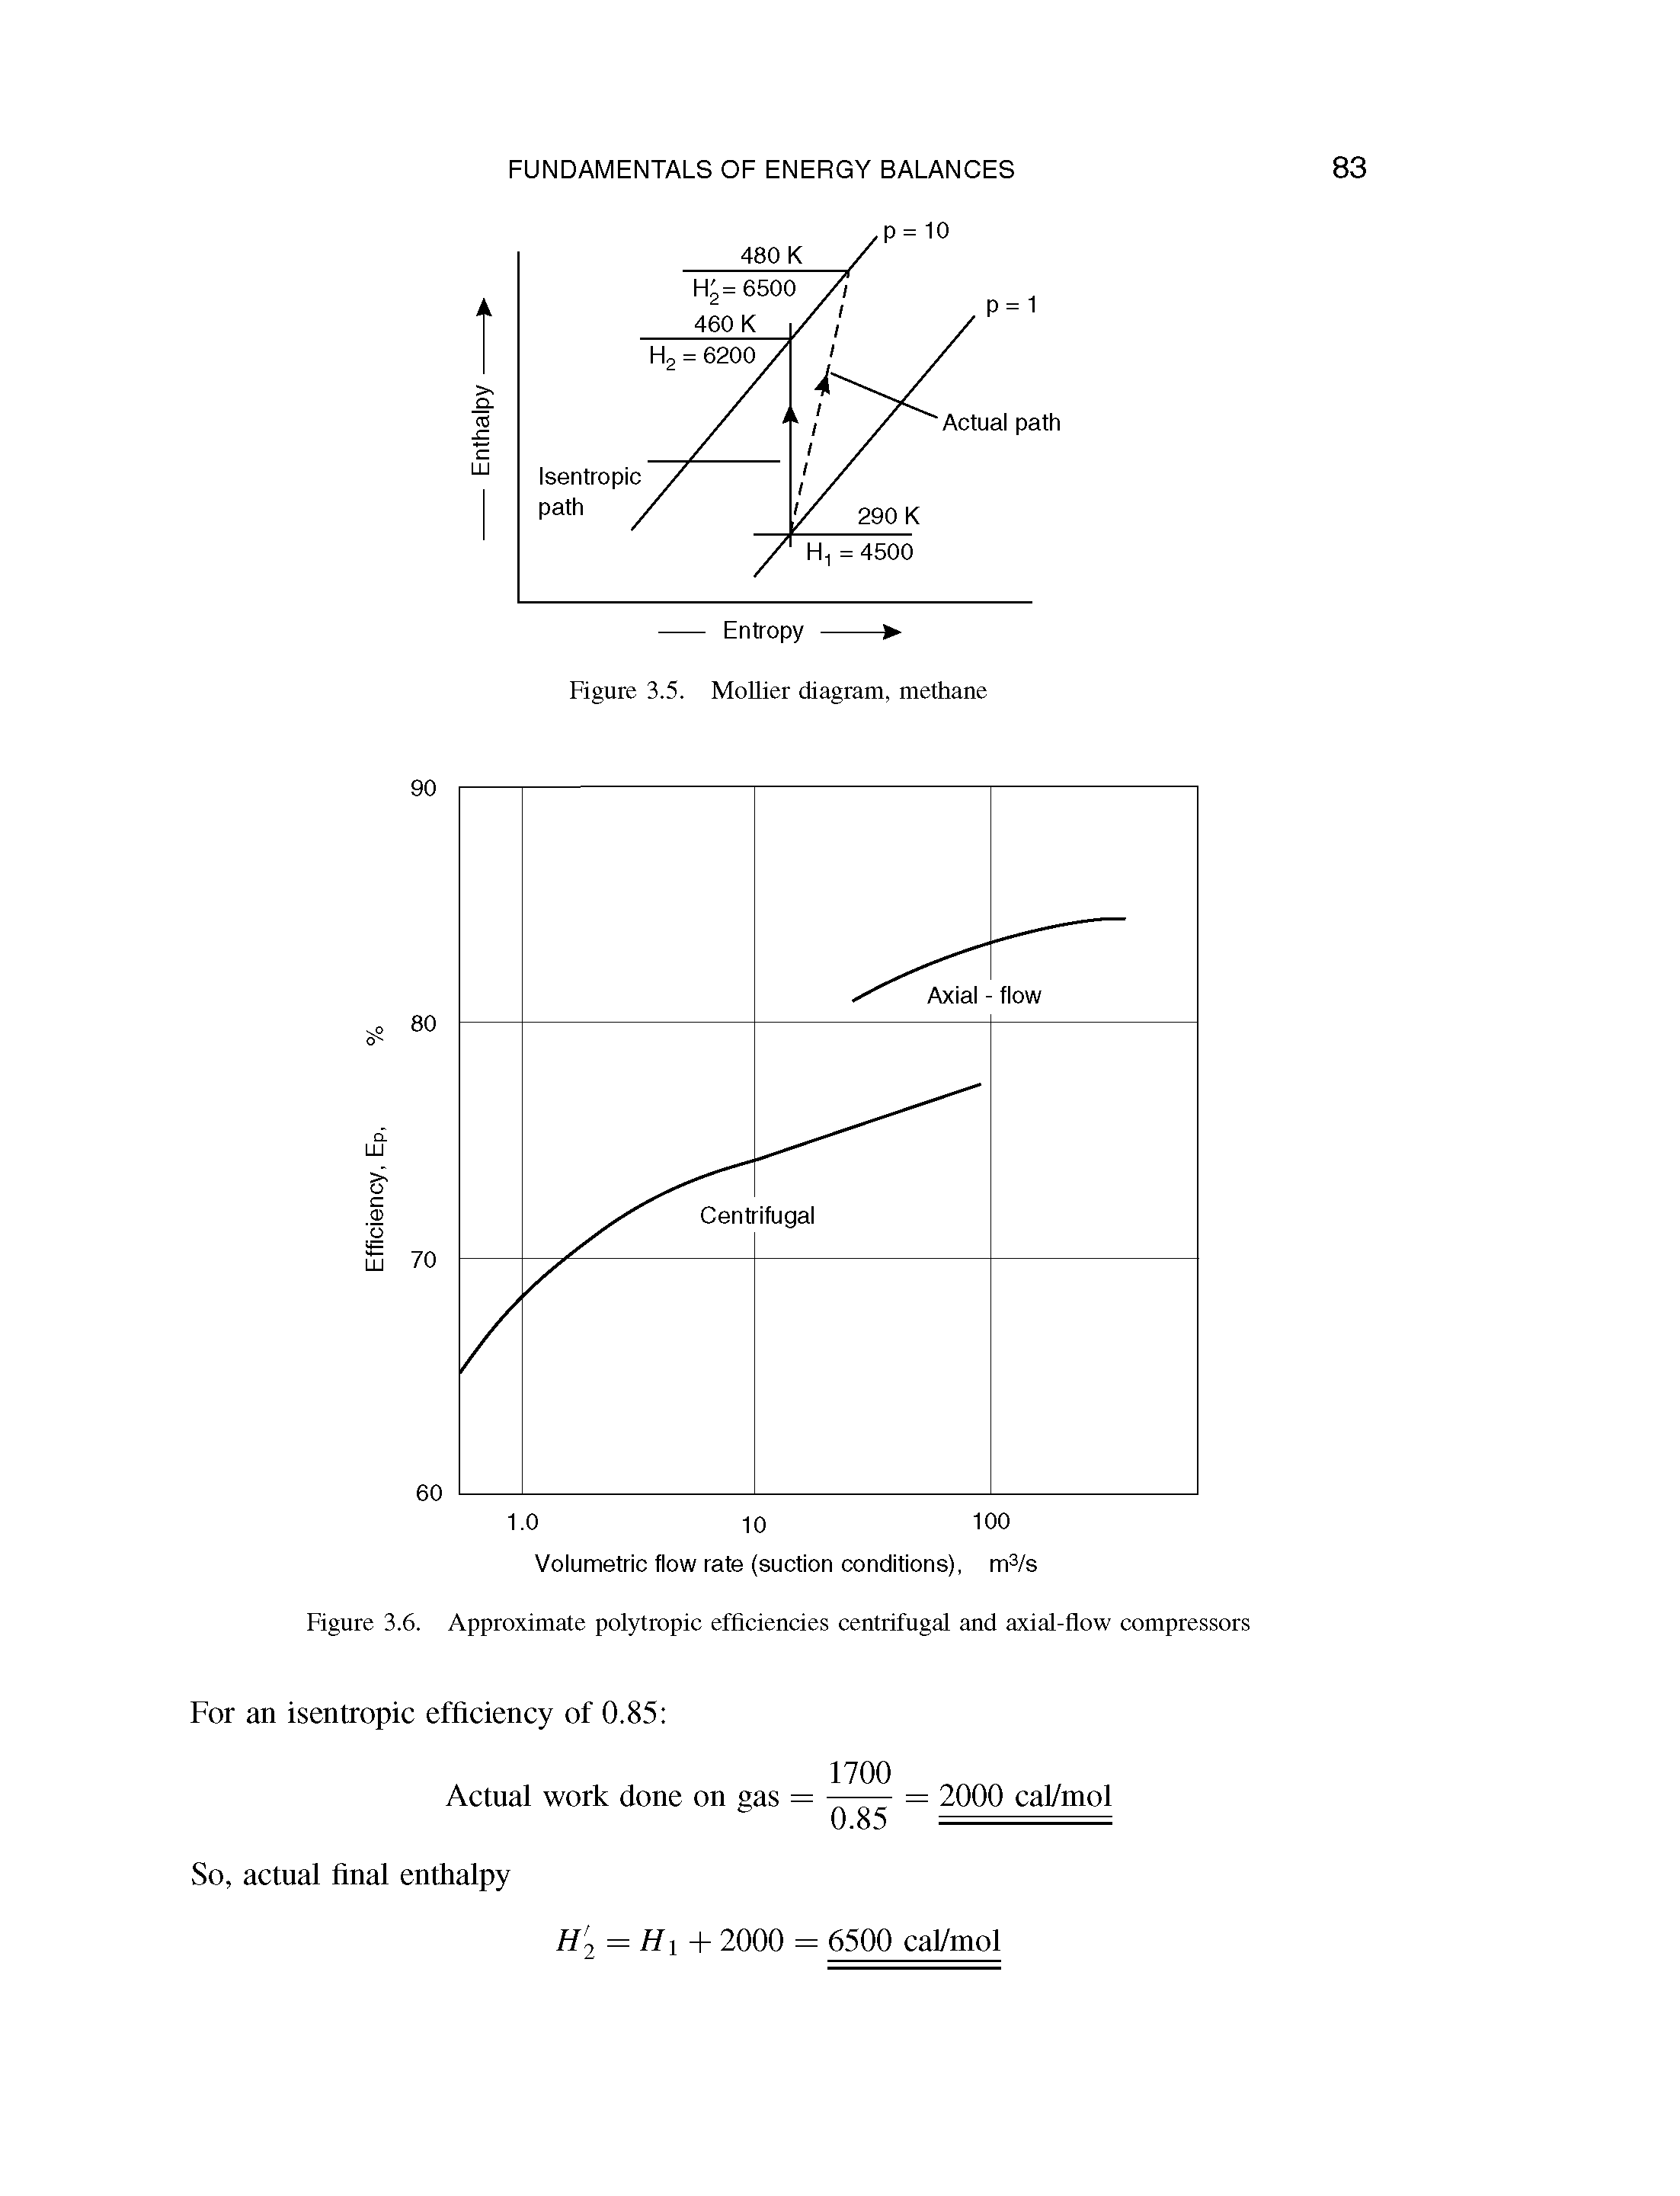 Figure 3.6. Approximate polytropic efficiencies centrifugal and axial-flow compressors...